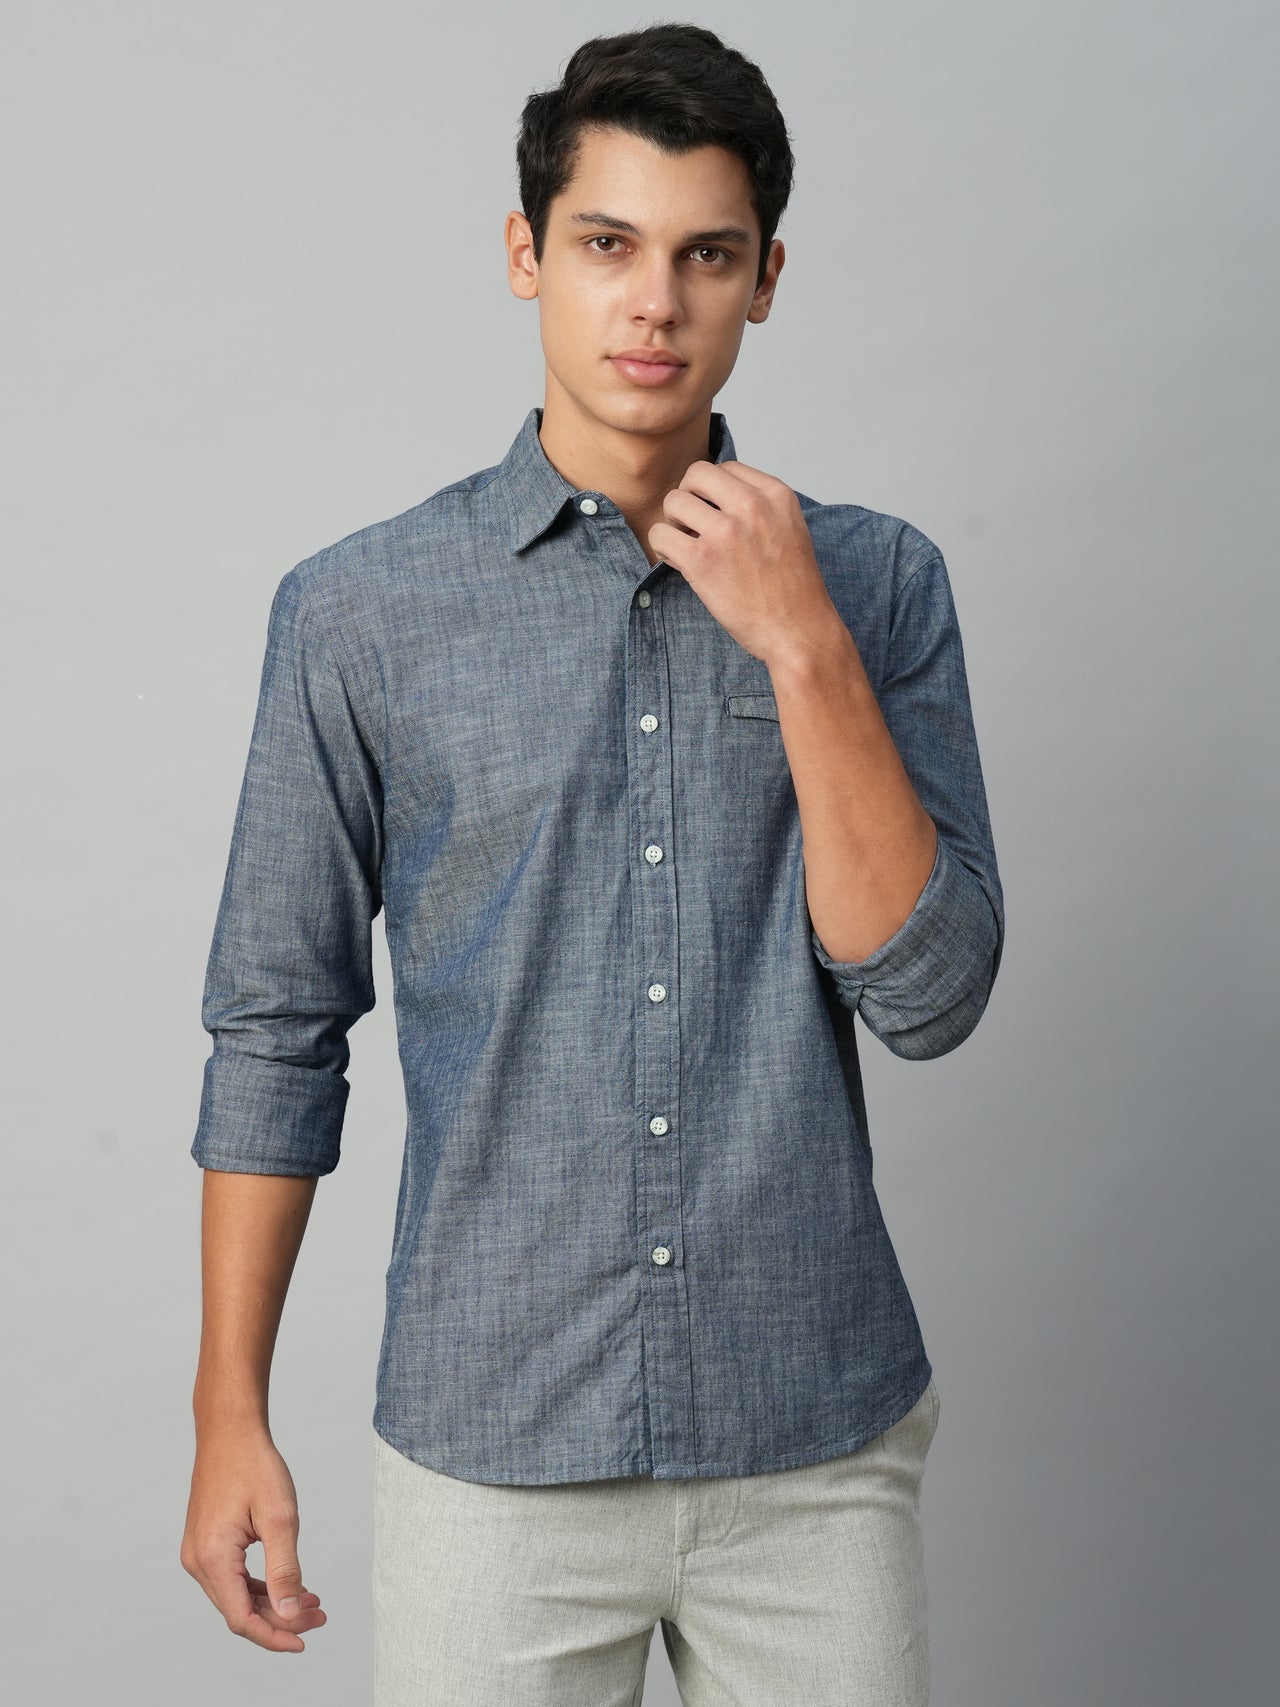 Men's Cotton Blue Regular Fit Shirts